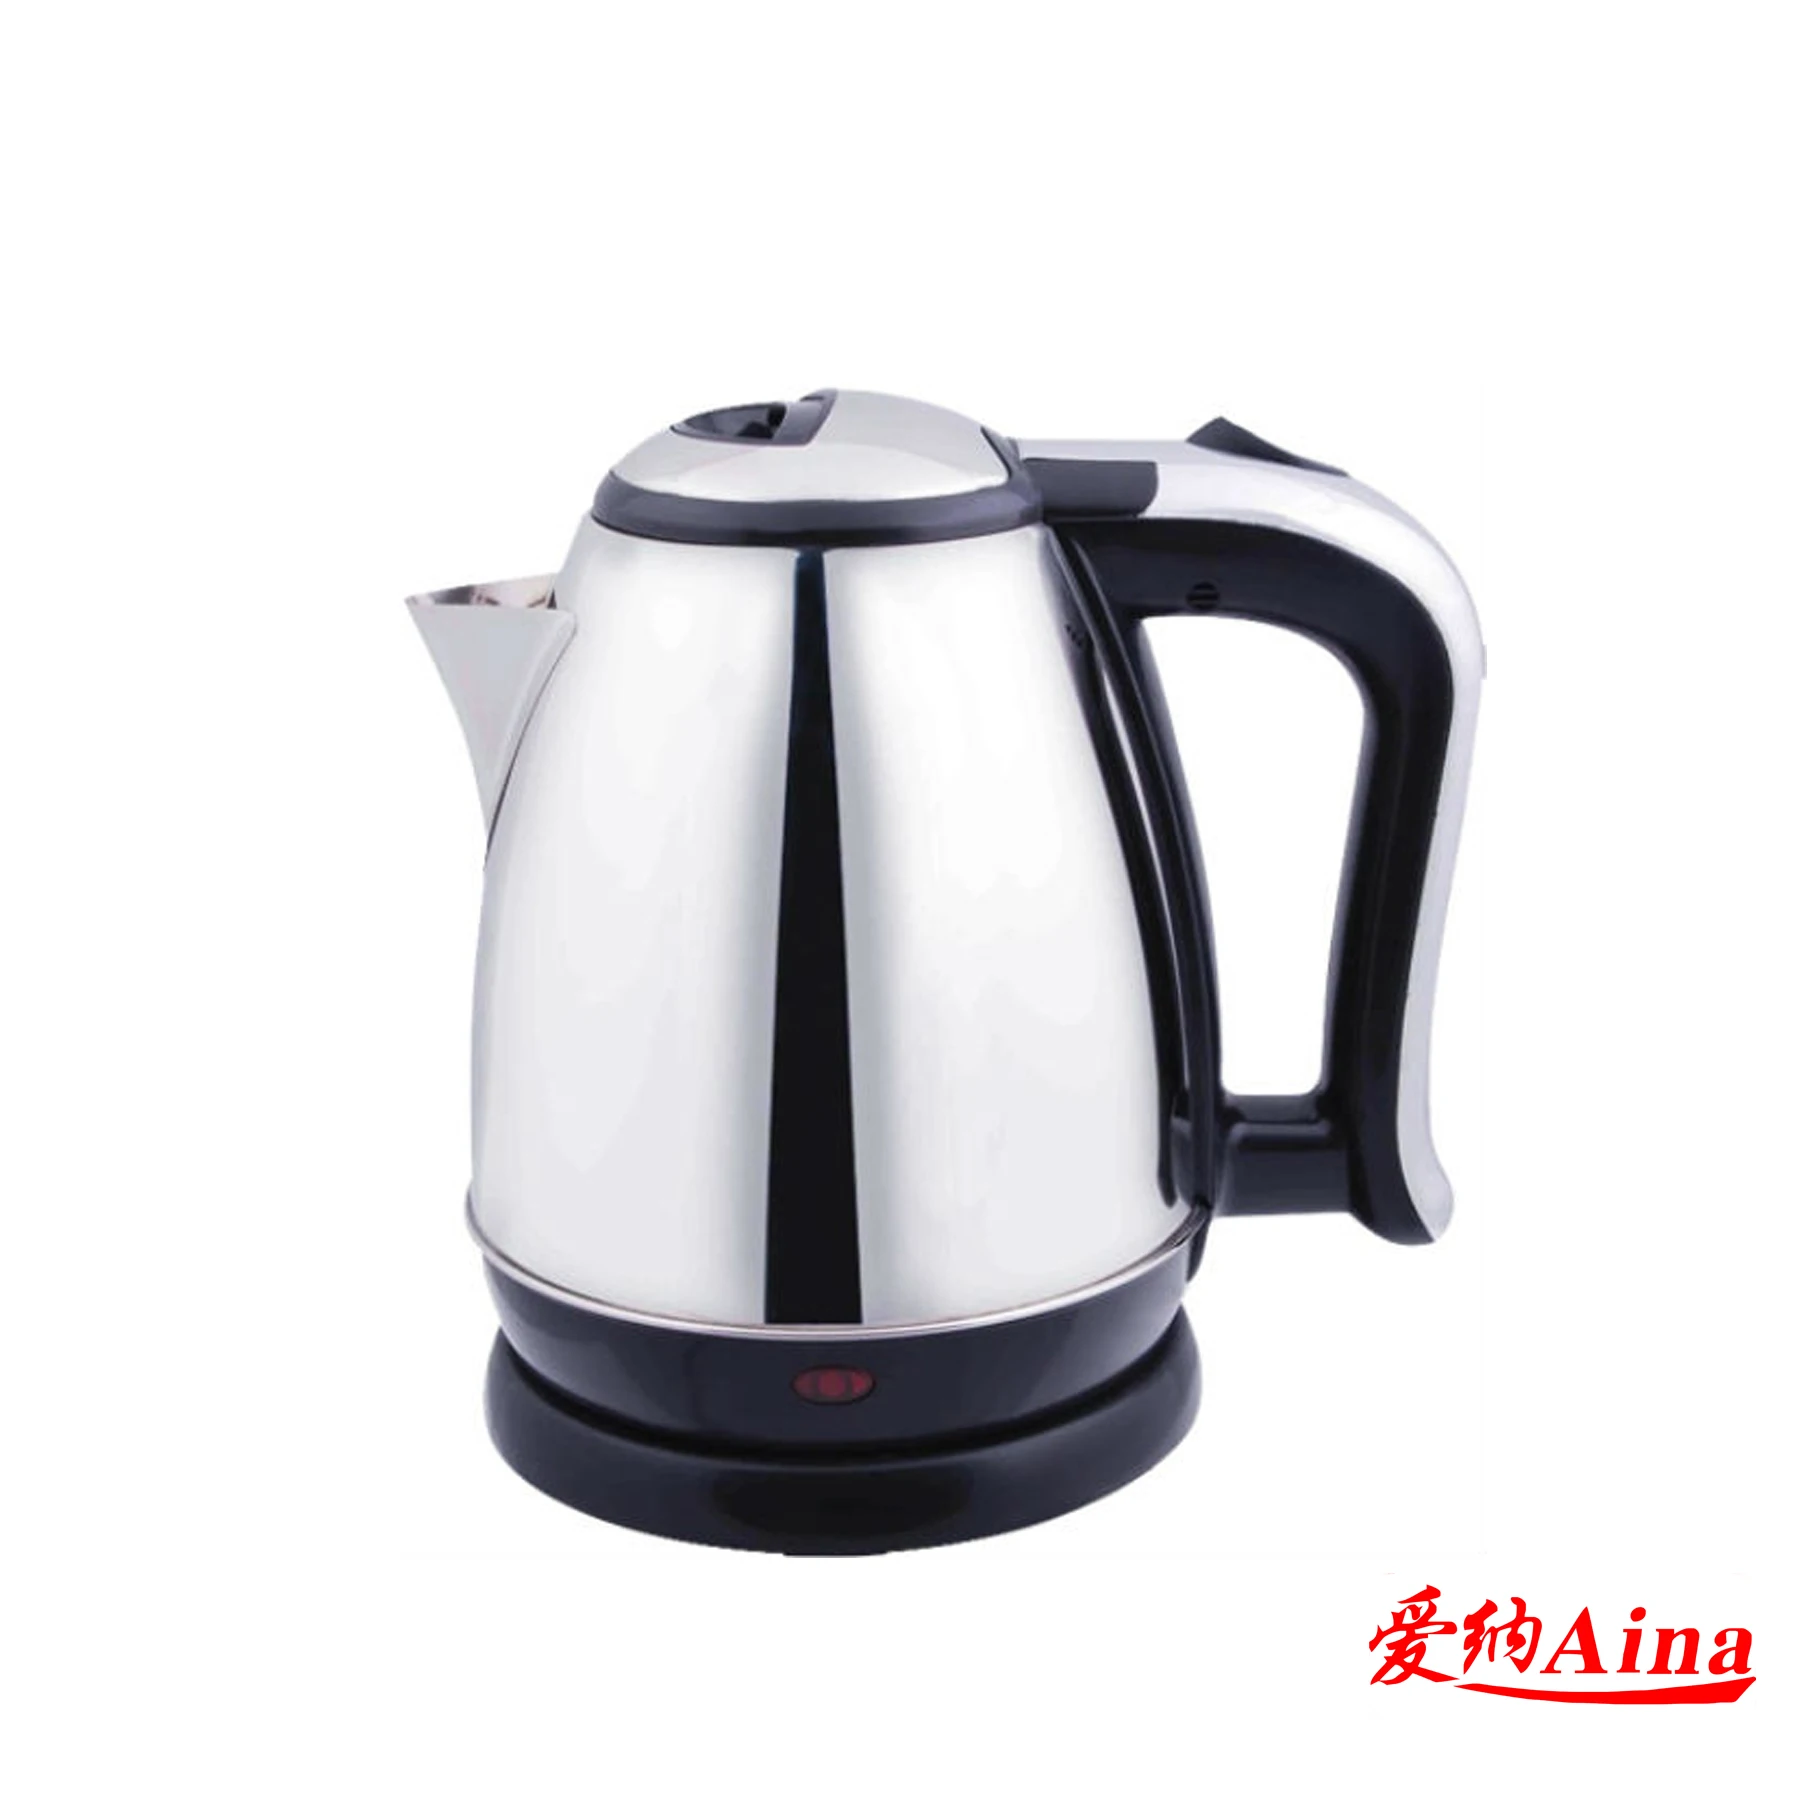 best stainless steel electric tea kettle